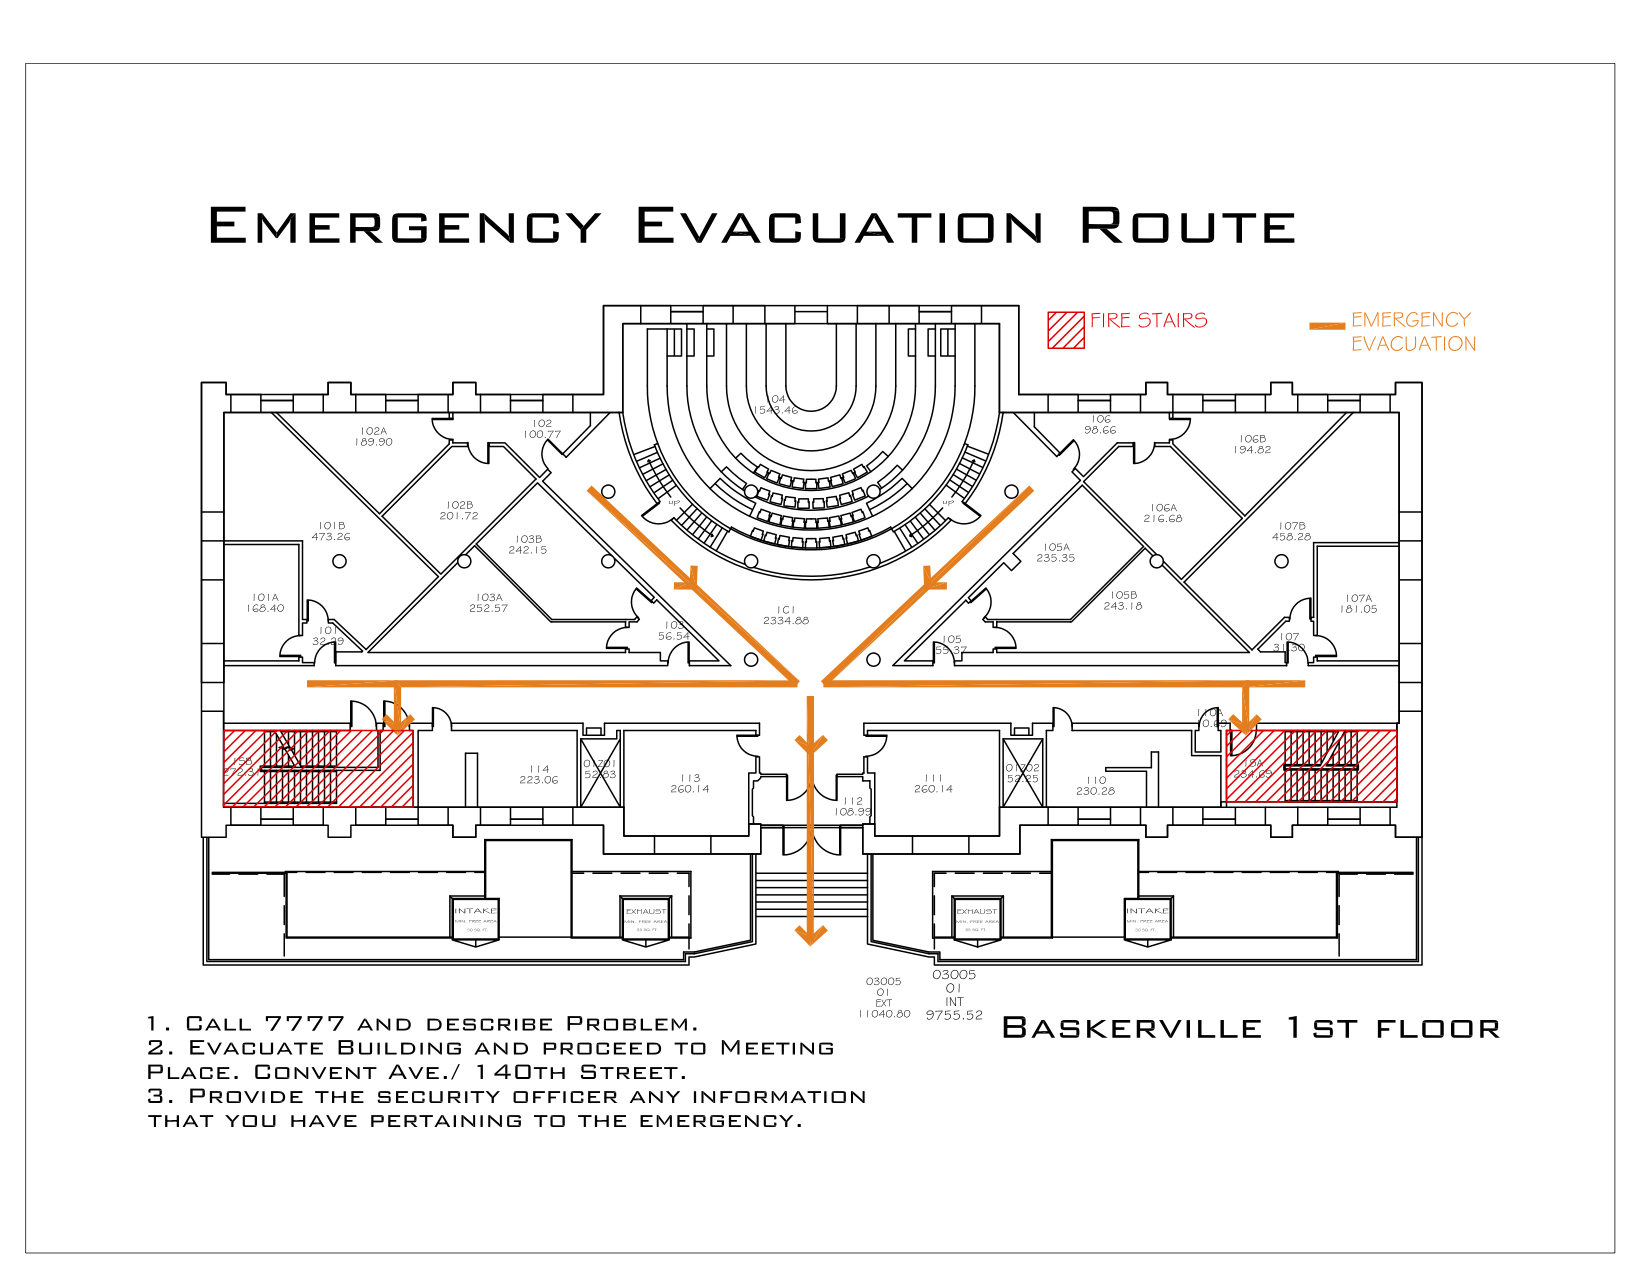 Baskerville Hall - Evacuation Route 3